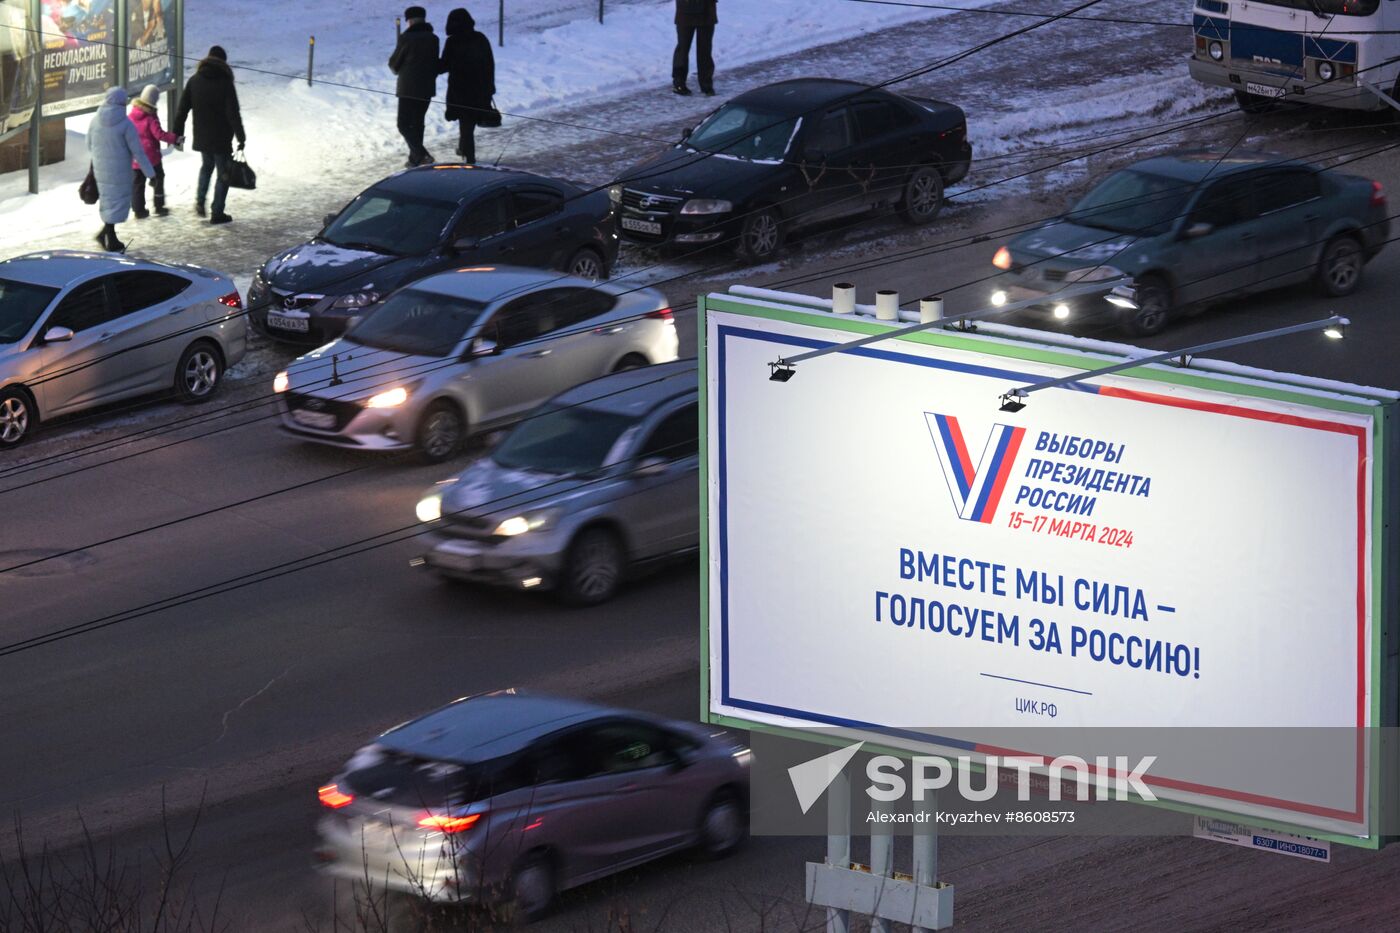 Russia Presidential Election Campaign Slogan